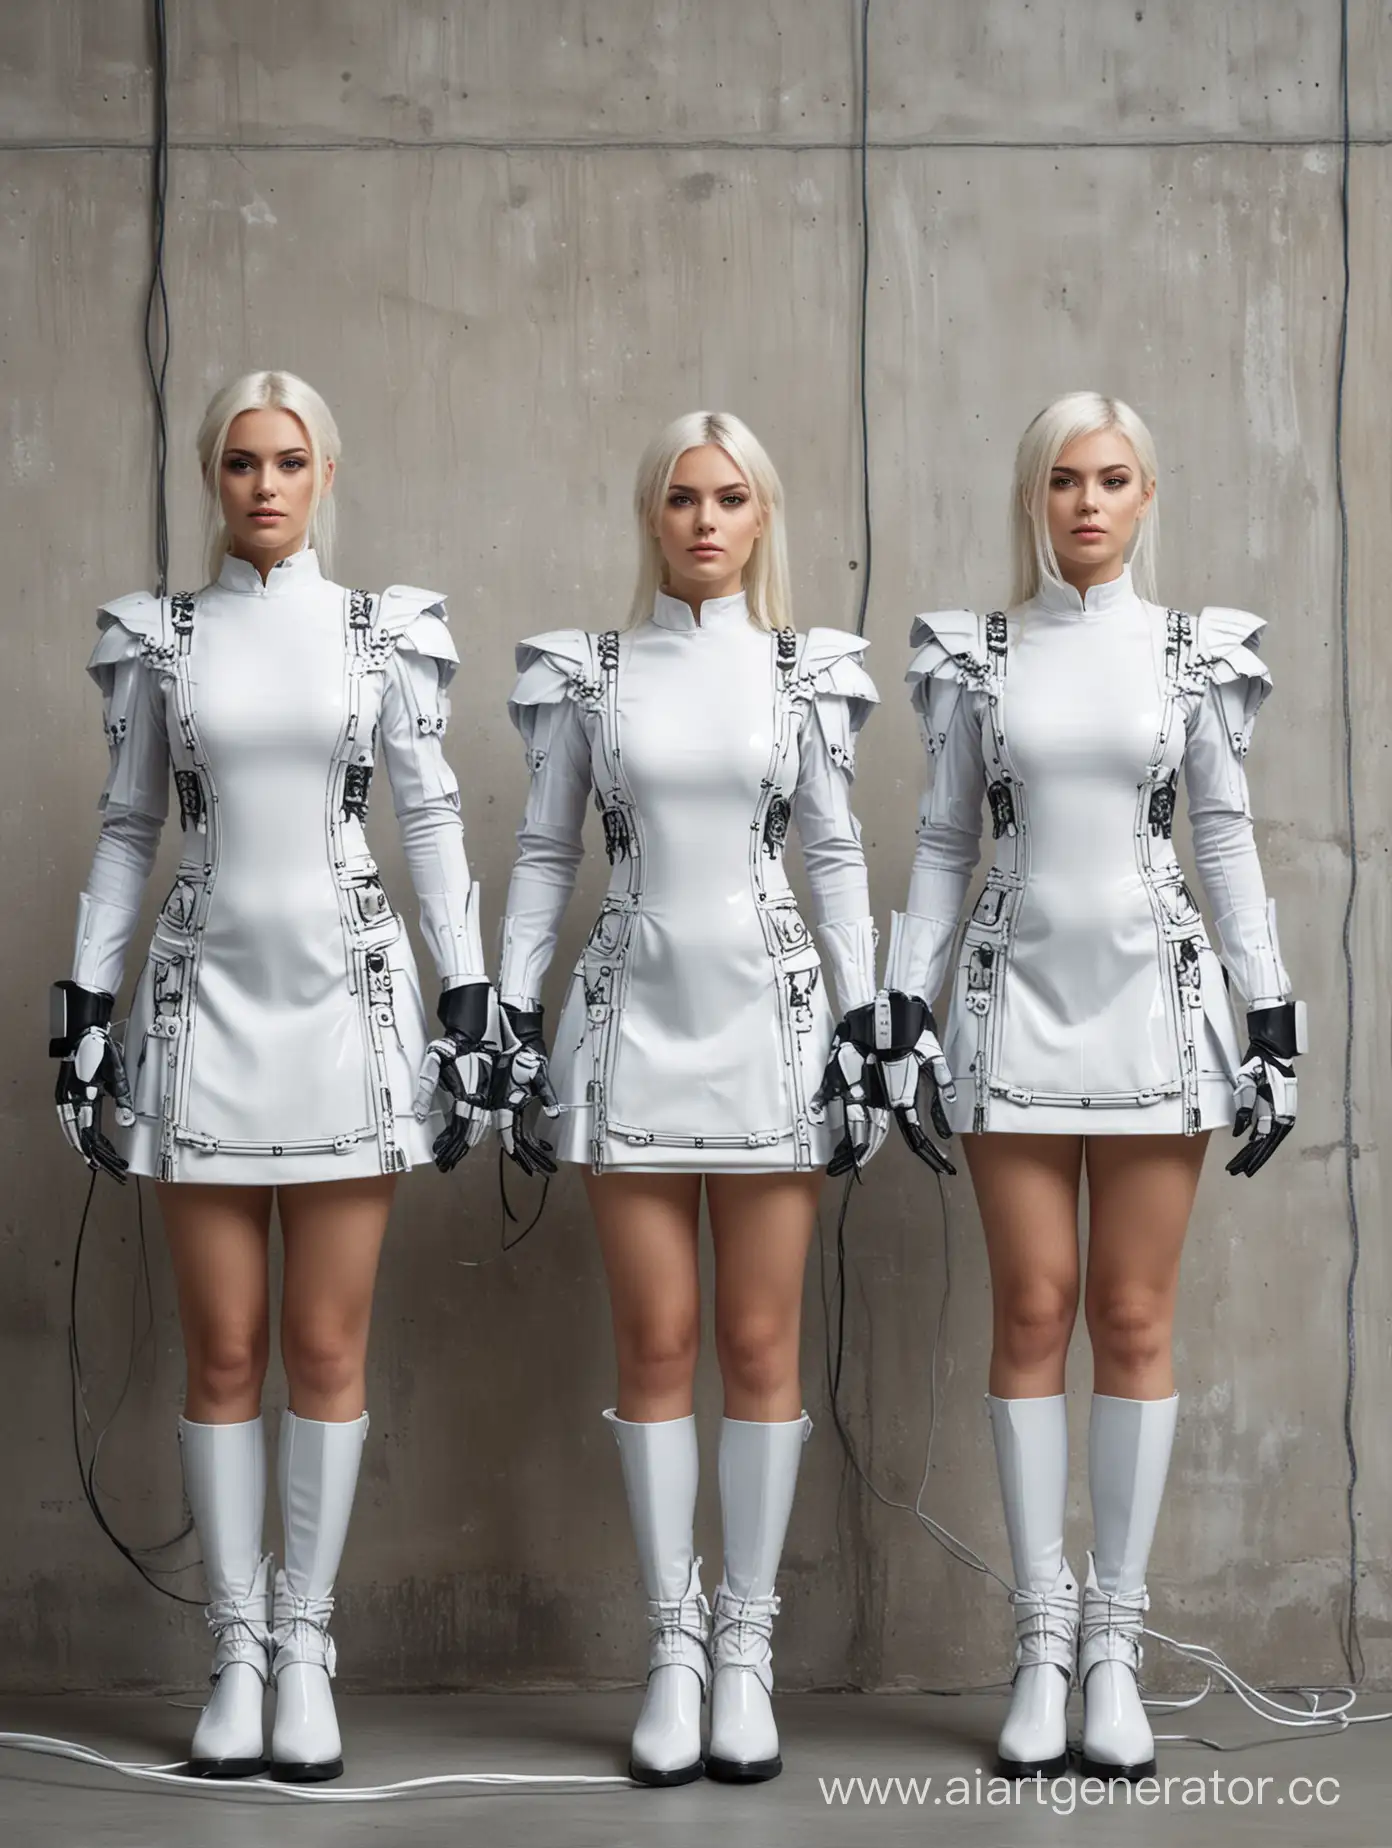 Futuristic-Female-Cyborg-Maids-Charging-Against-Wall